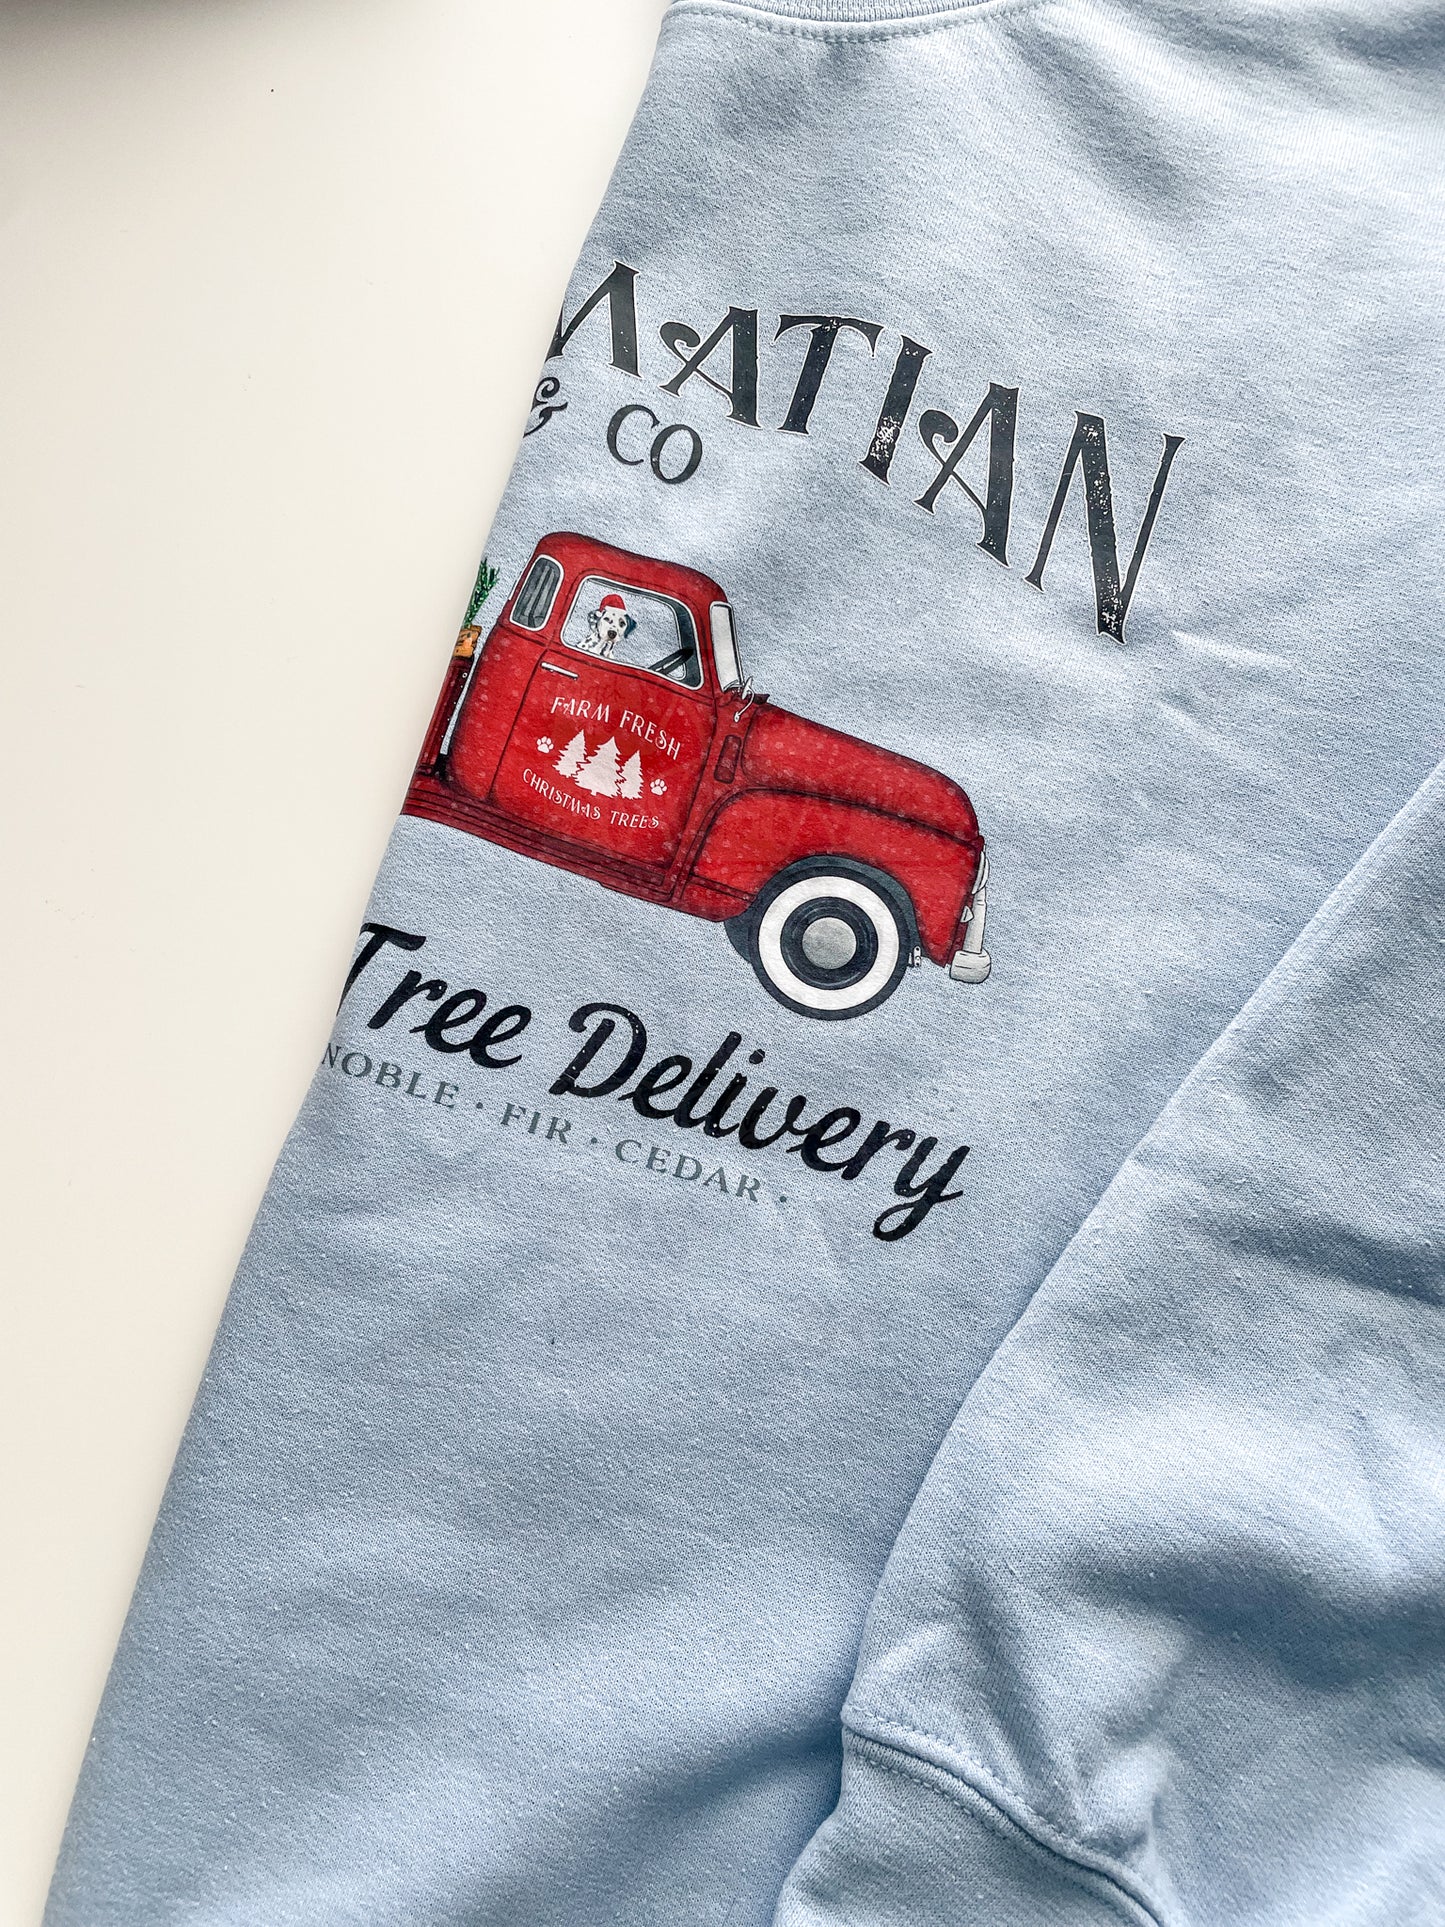 Christmas Tree Delivery - Dalmatian and Co Truck Crewneck Sweatshirt